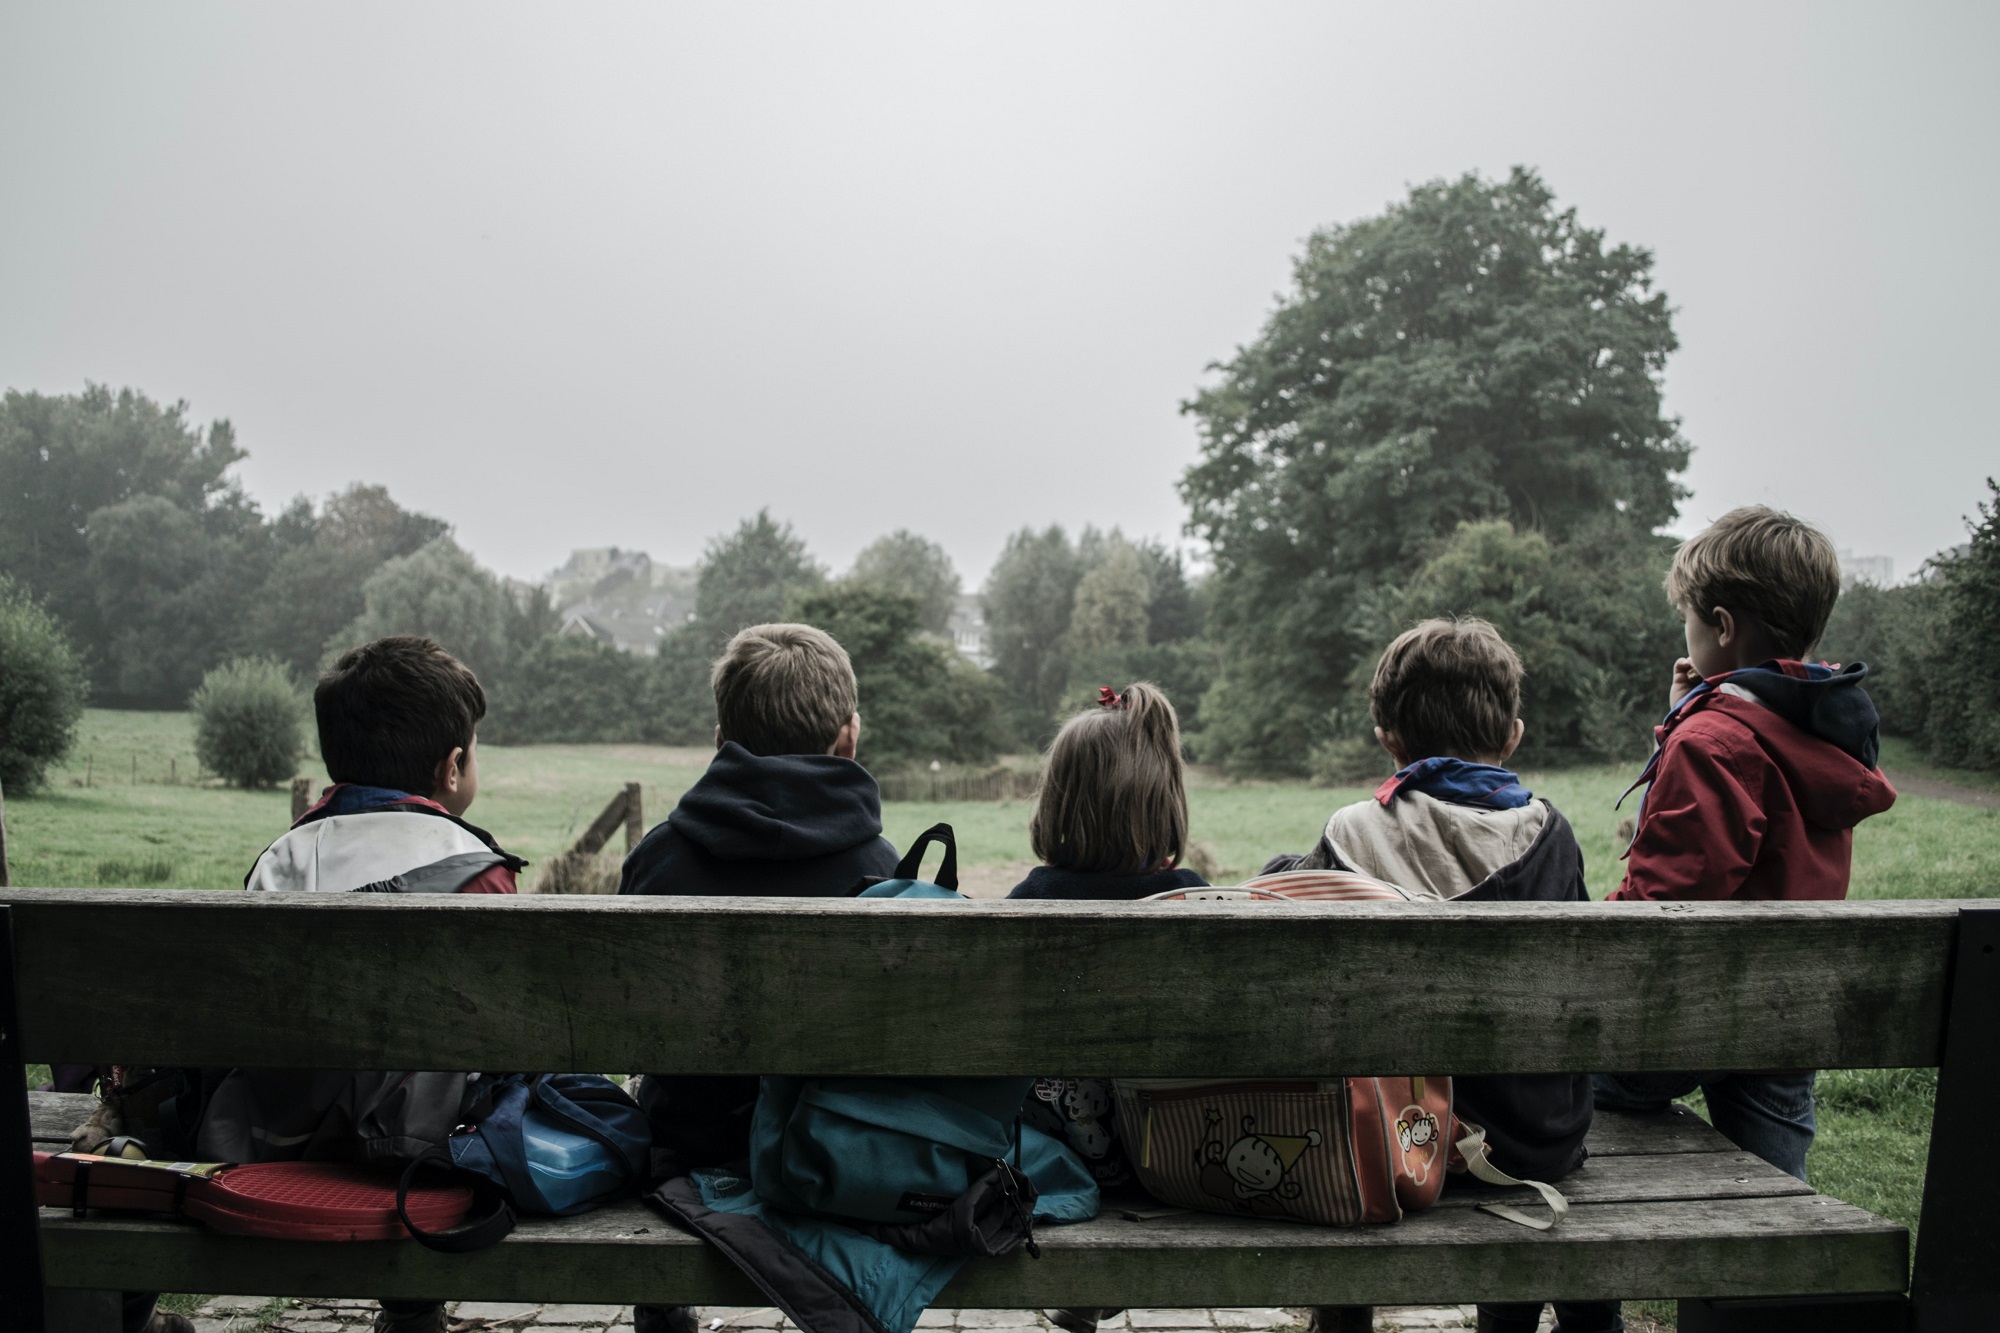 Children sit on a bench (credit Piron Guillaume via Unsplash)